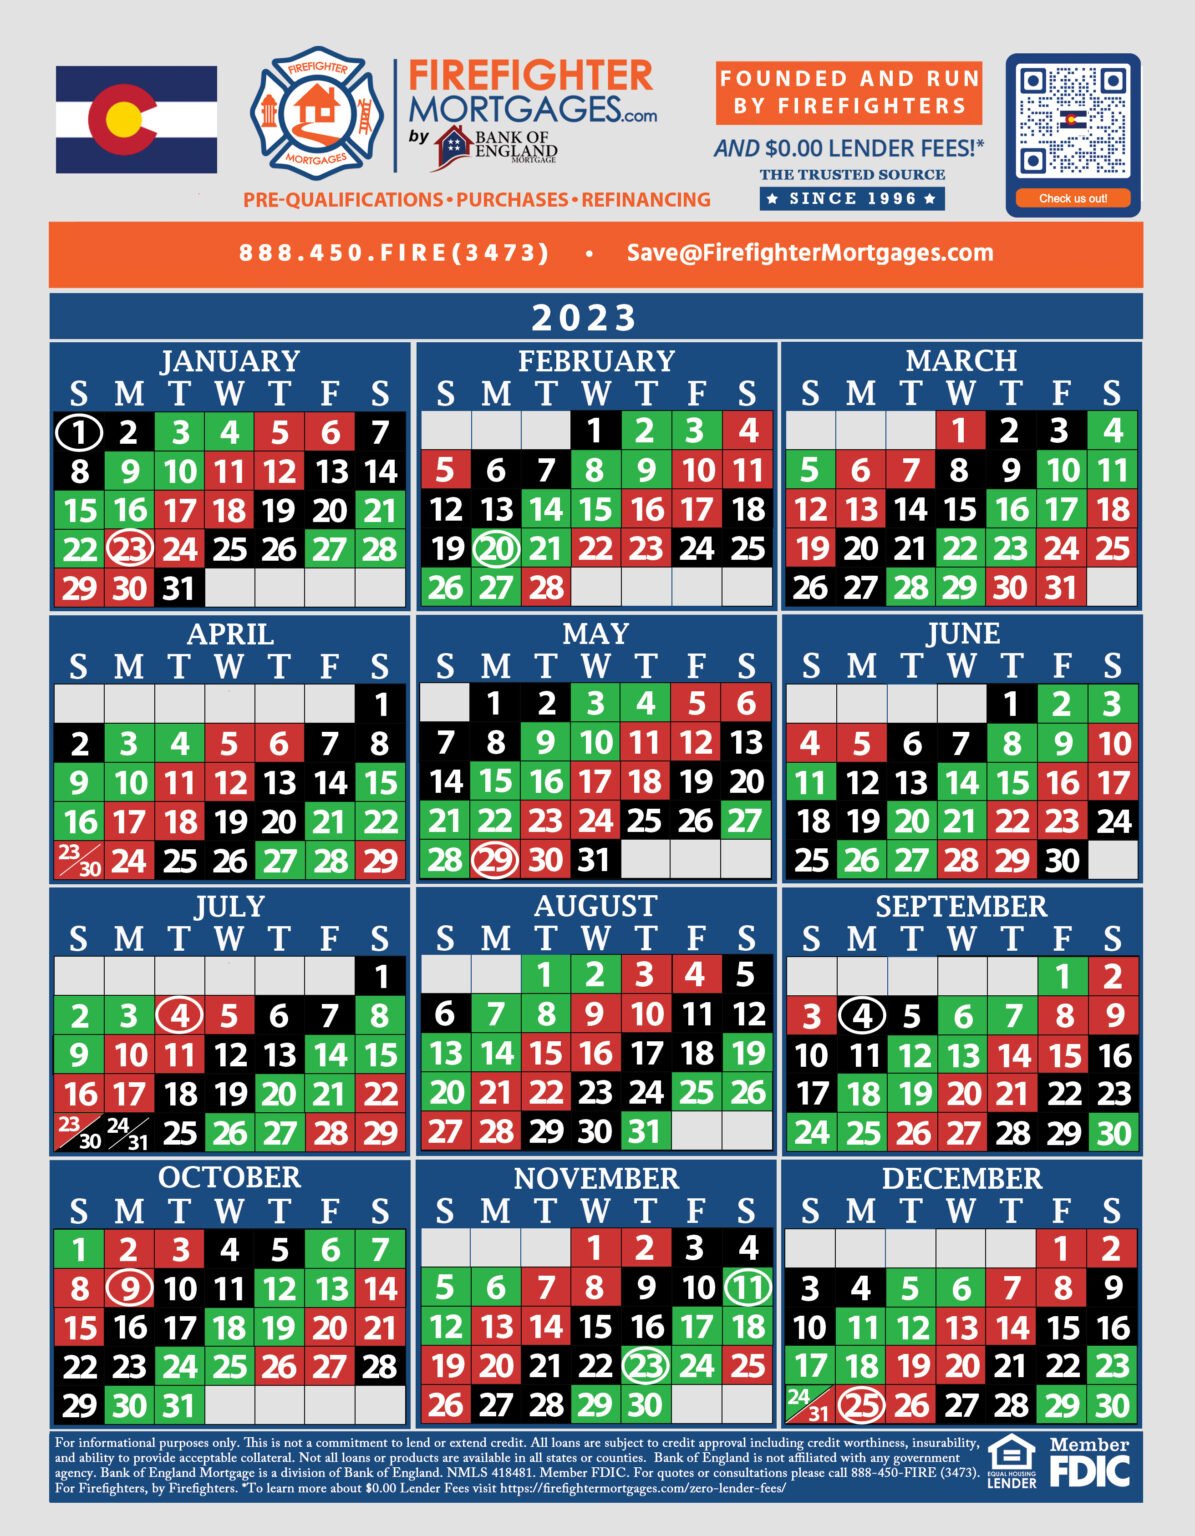 Firefighter Shift Calendars Firefighter Mortgages®